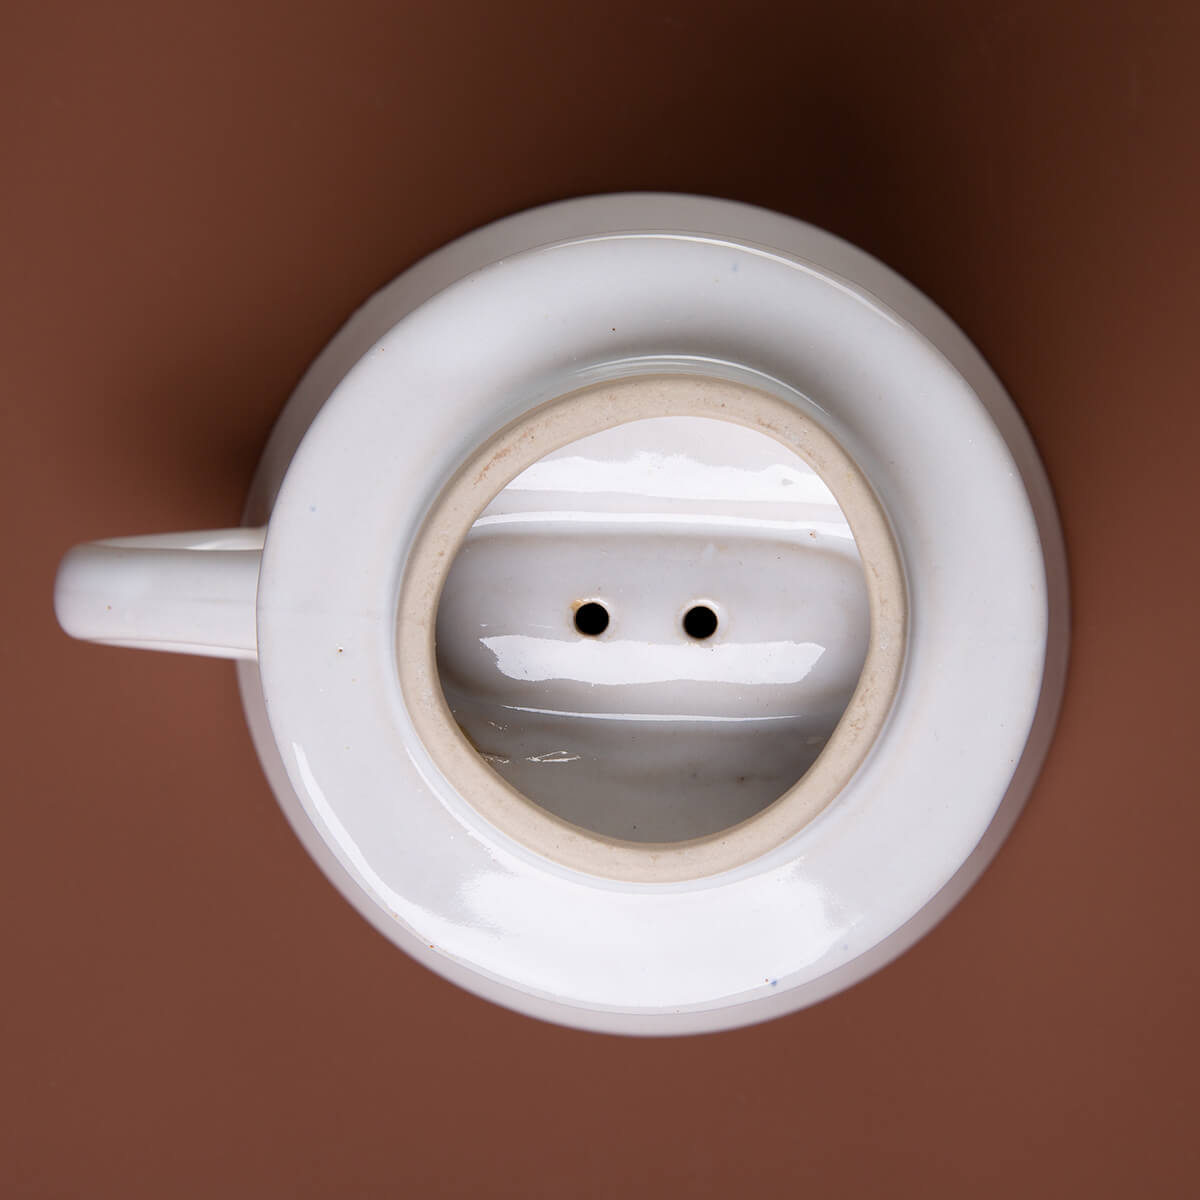 Keramik Kaffeefilter Größe 4 - Barista Royal - Barista Royal GmbH